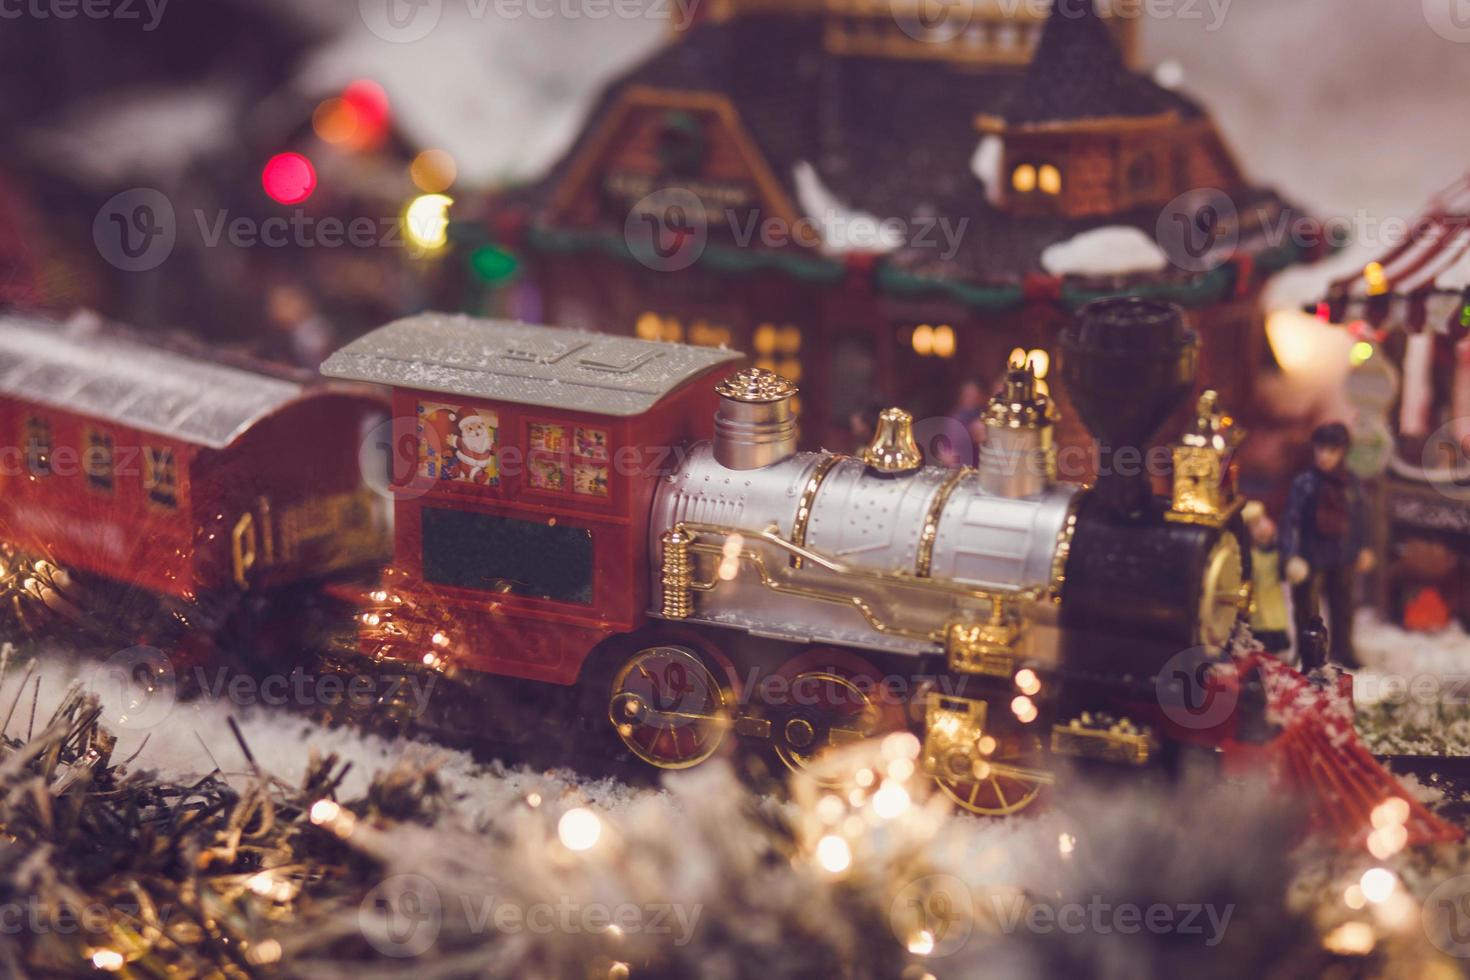 toy vintage steam locomotive decorated Christmas tree photo